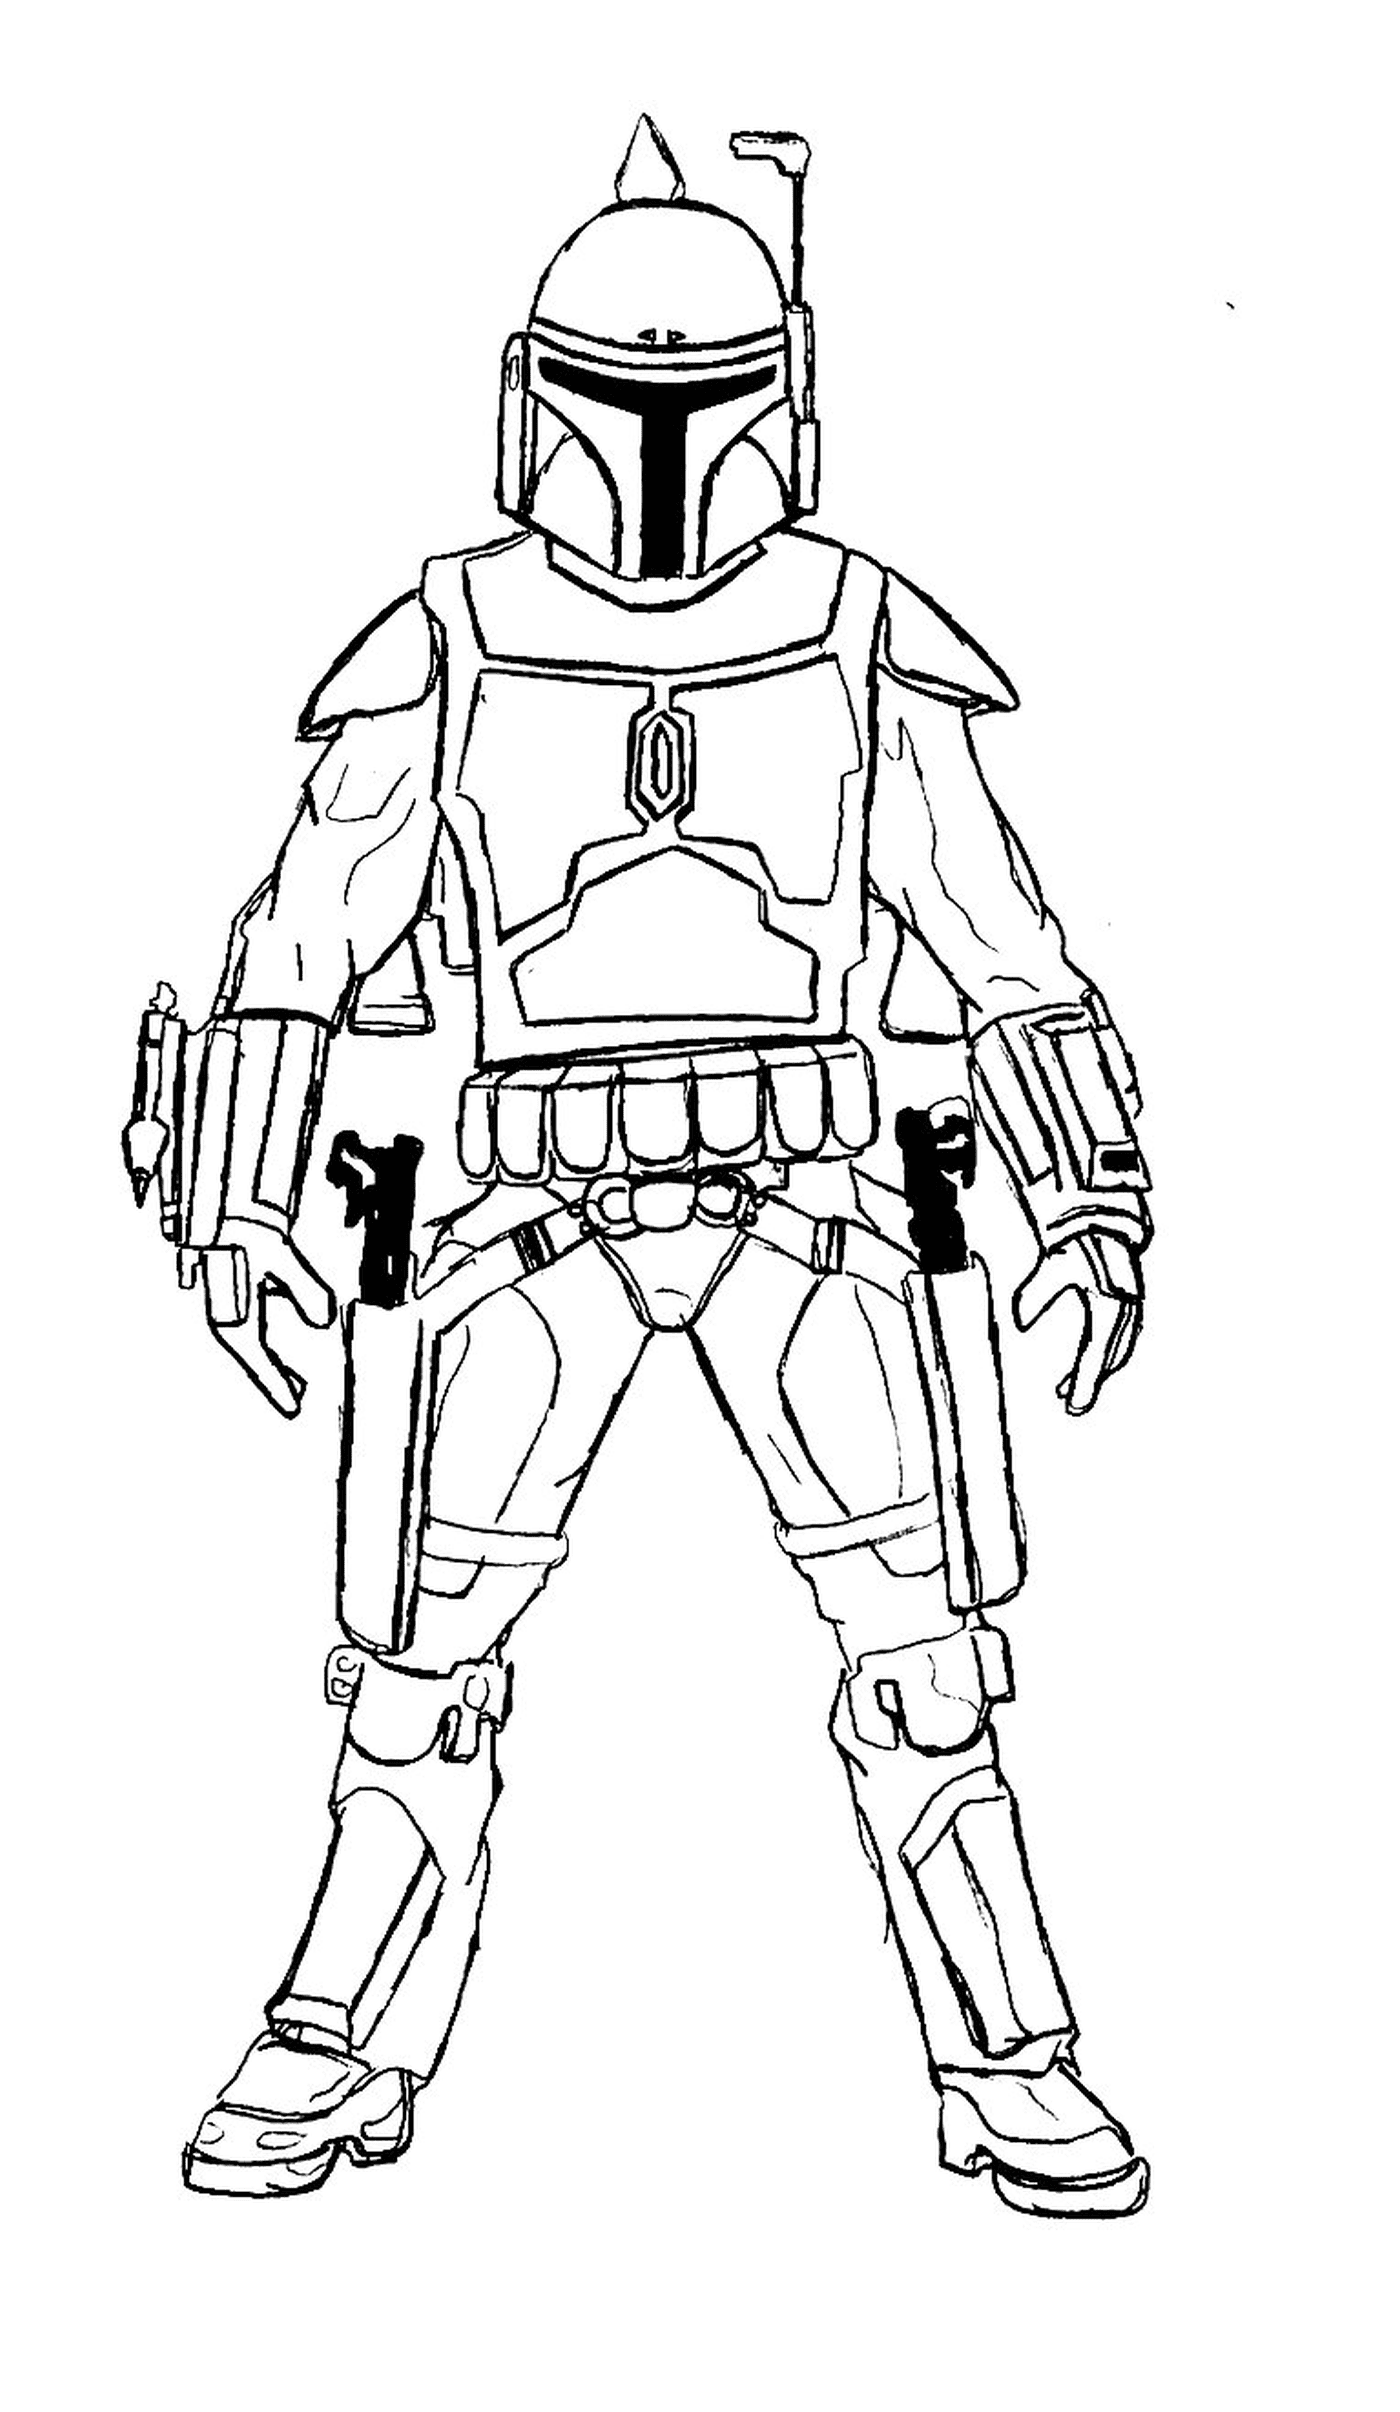  Clone trooper from Star Wars 